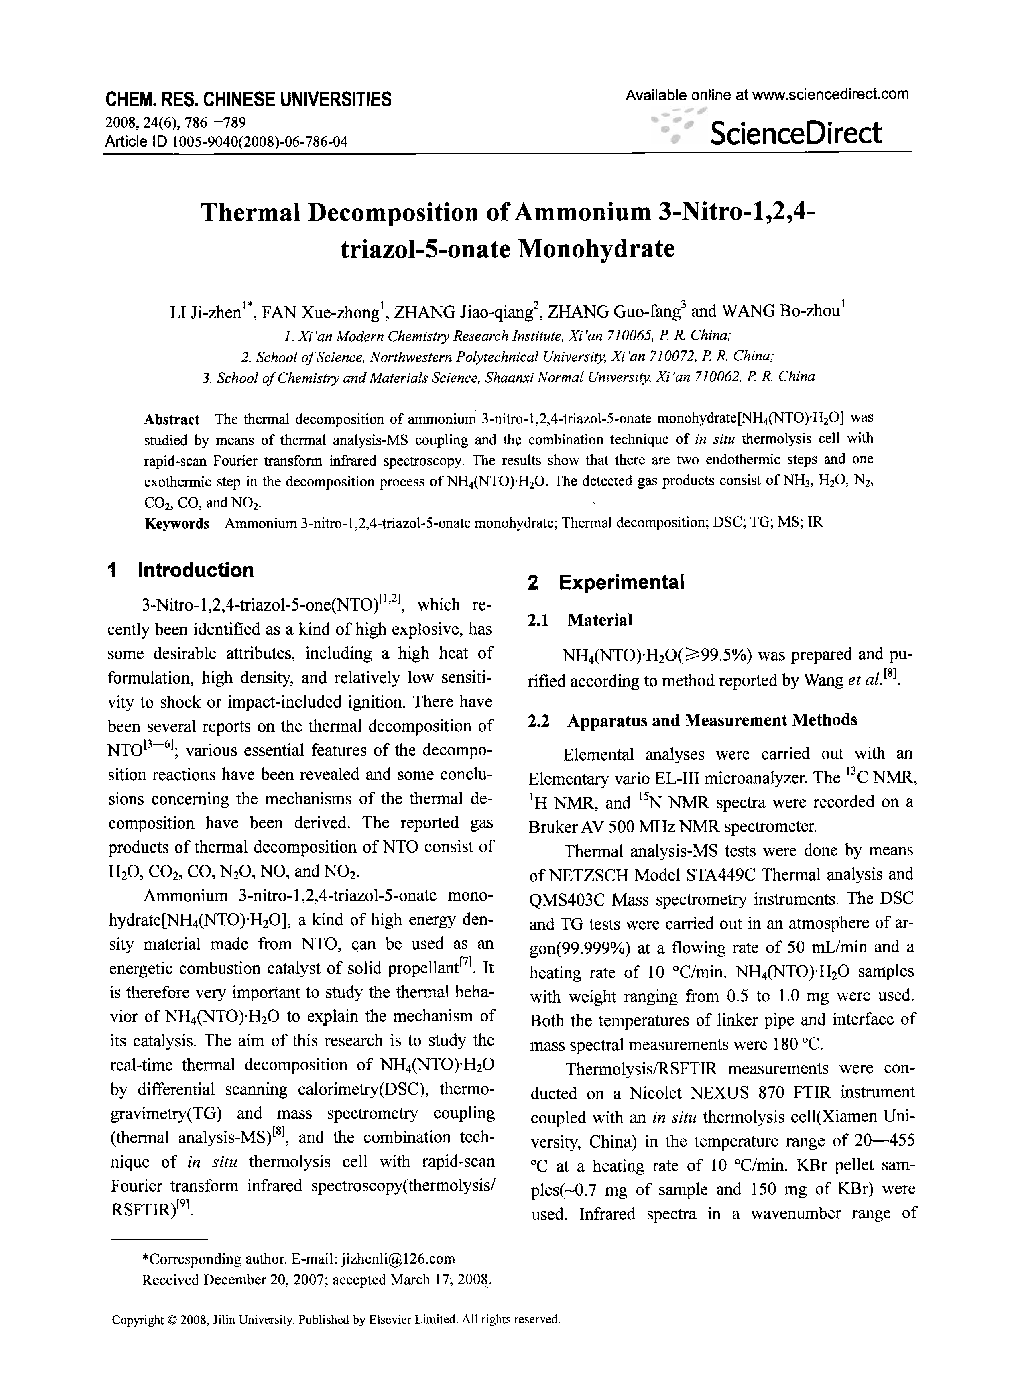 Thermal Decomposition of Ammonium 3-Nitro-1,2,4-triazol-5-onate Monohydrate